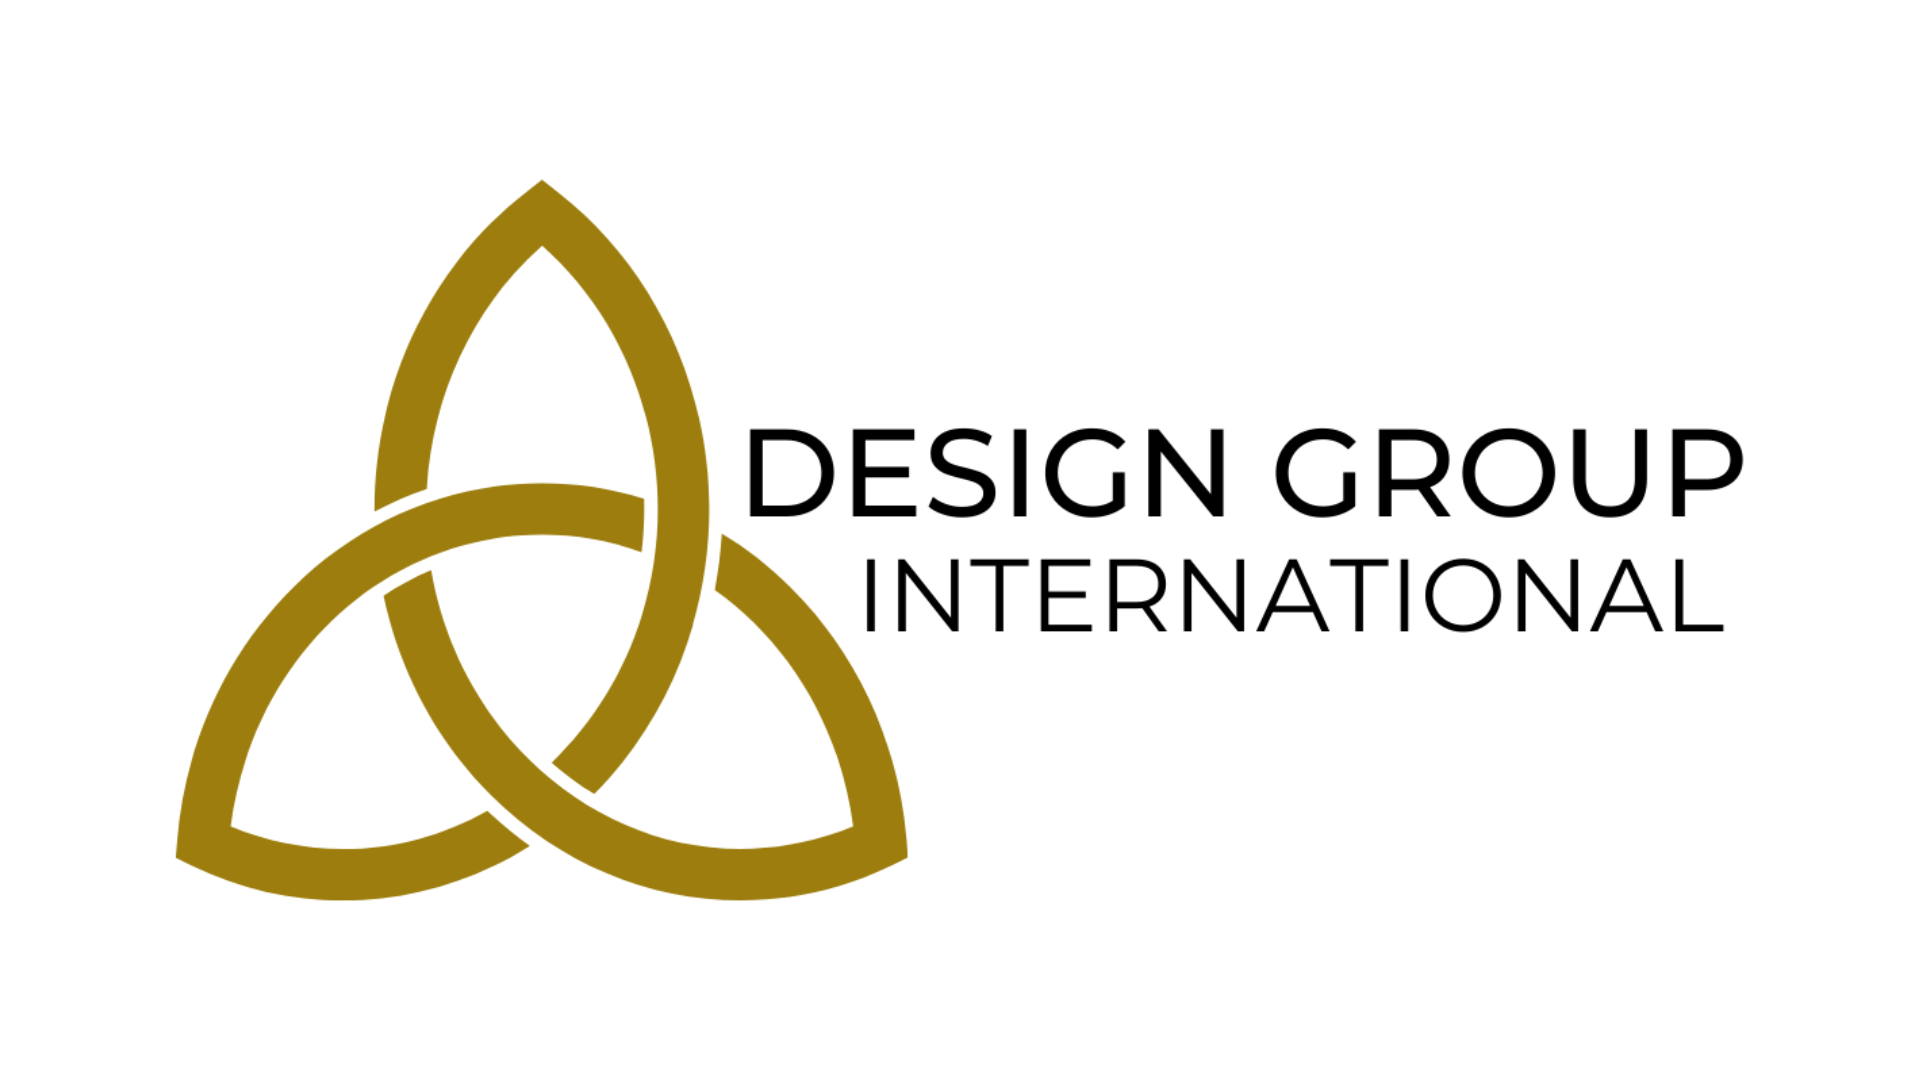 Design Group International logo_16x9